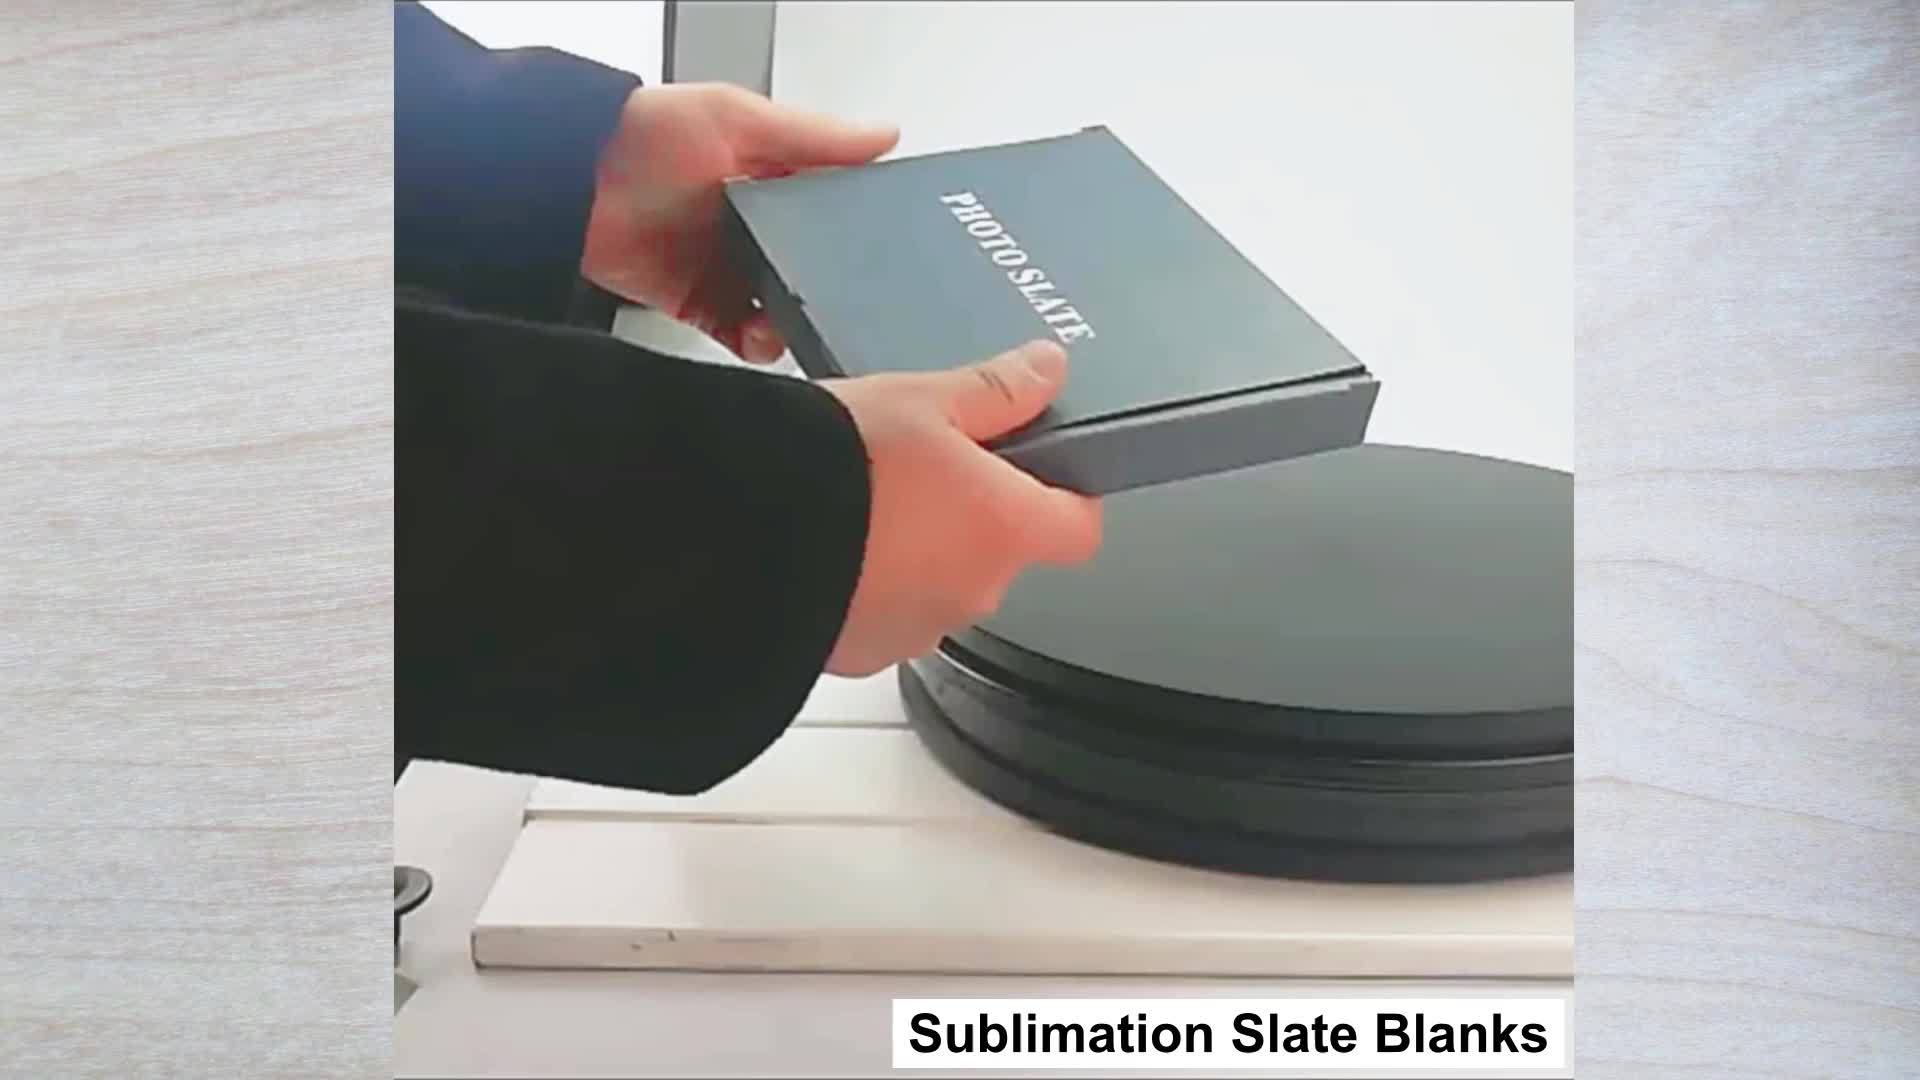 NUOLUX Sublimation Slate Blanks Sublimation Photo Slate Blank Picture Frame  with Display Holder 